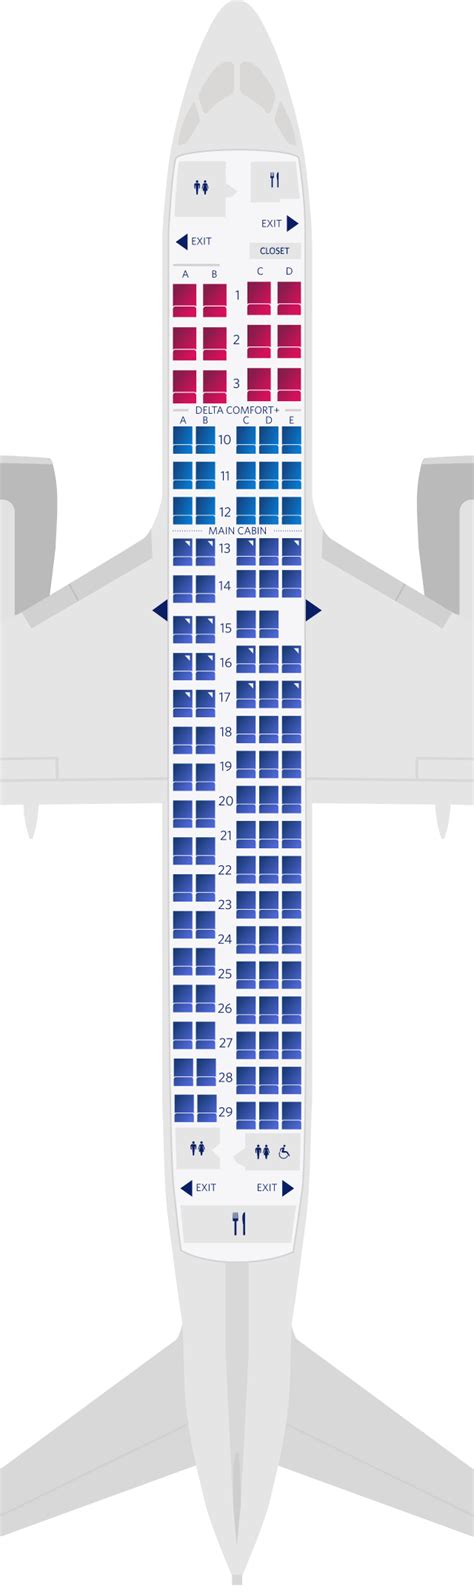 Delta Airlines Flight Seating Plan